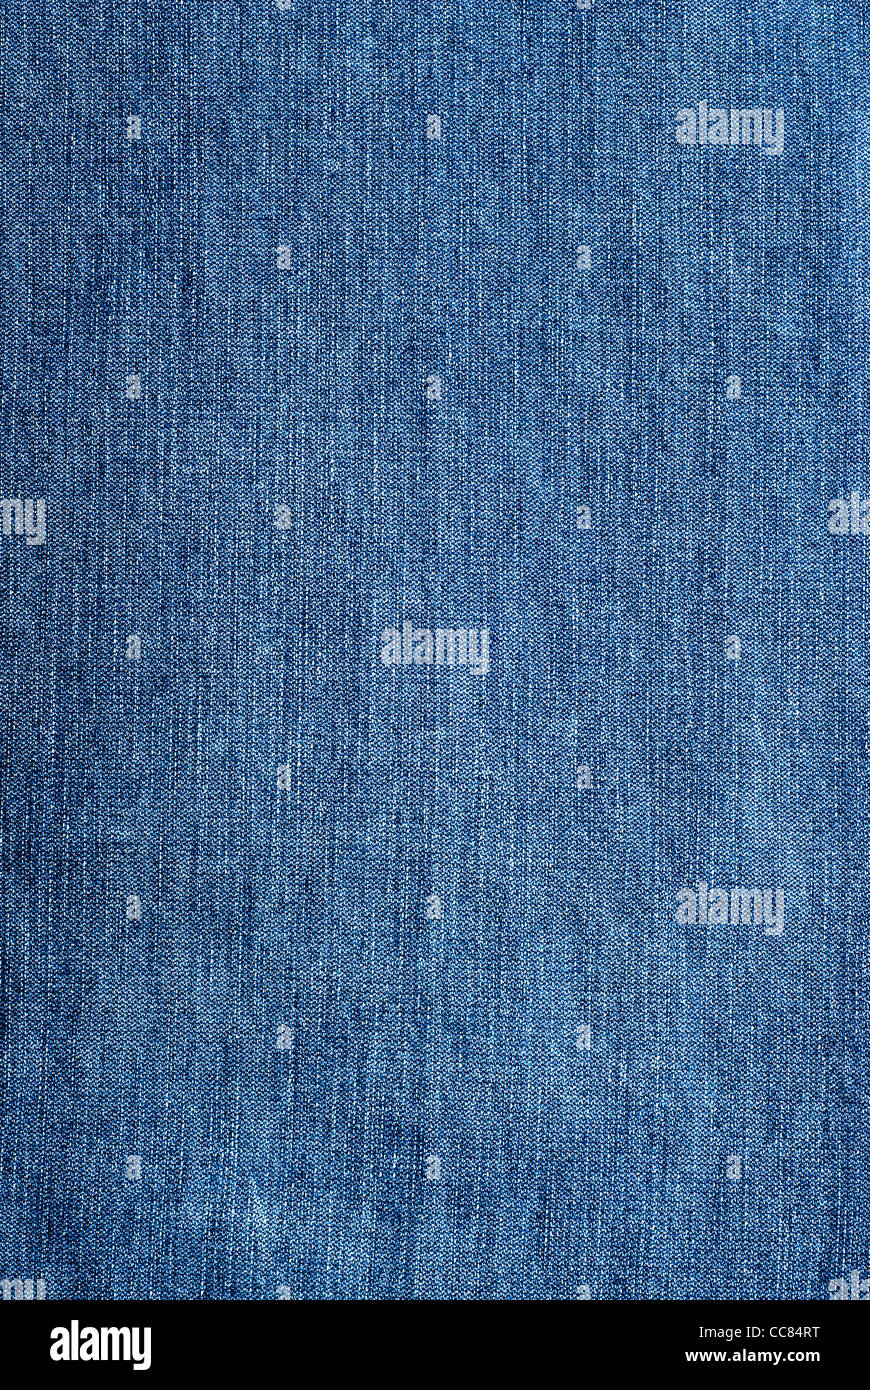 closeup of blue jeans fabric texture Stock Photo